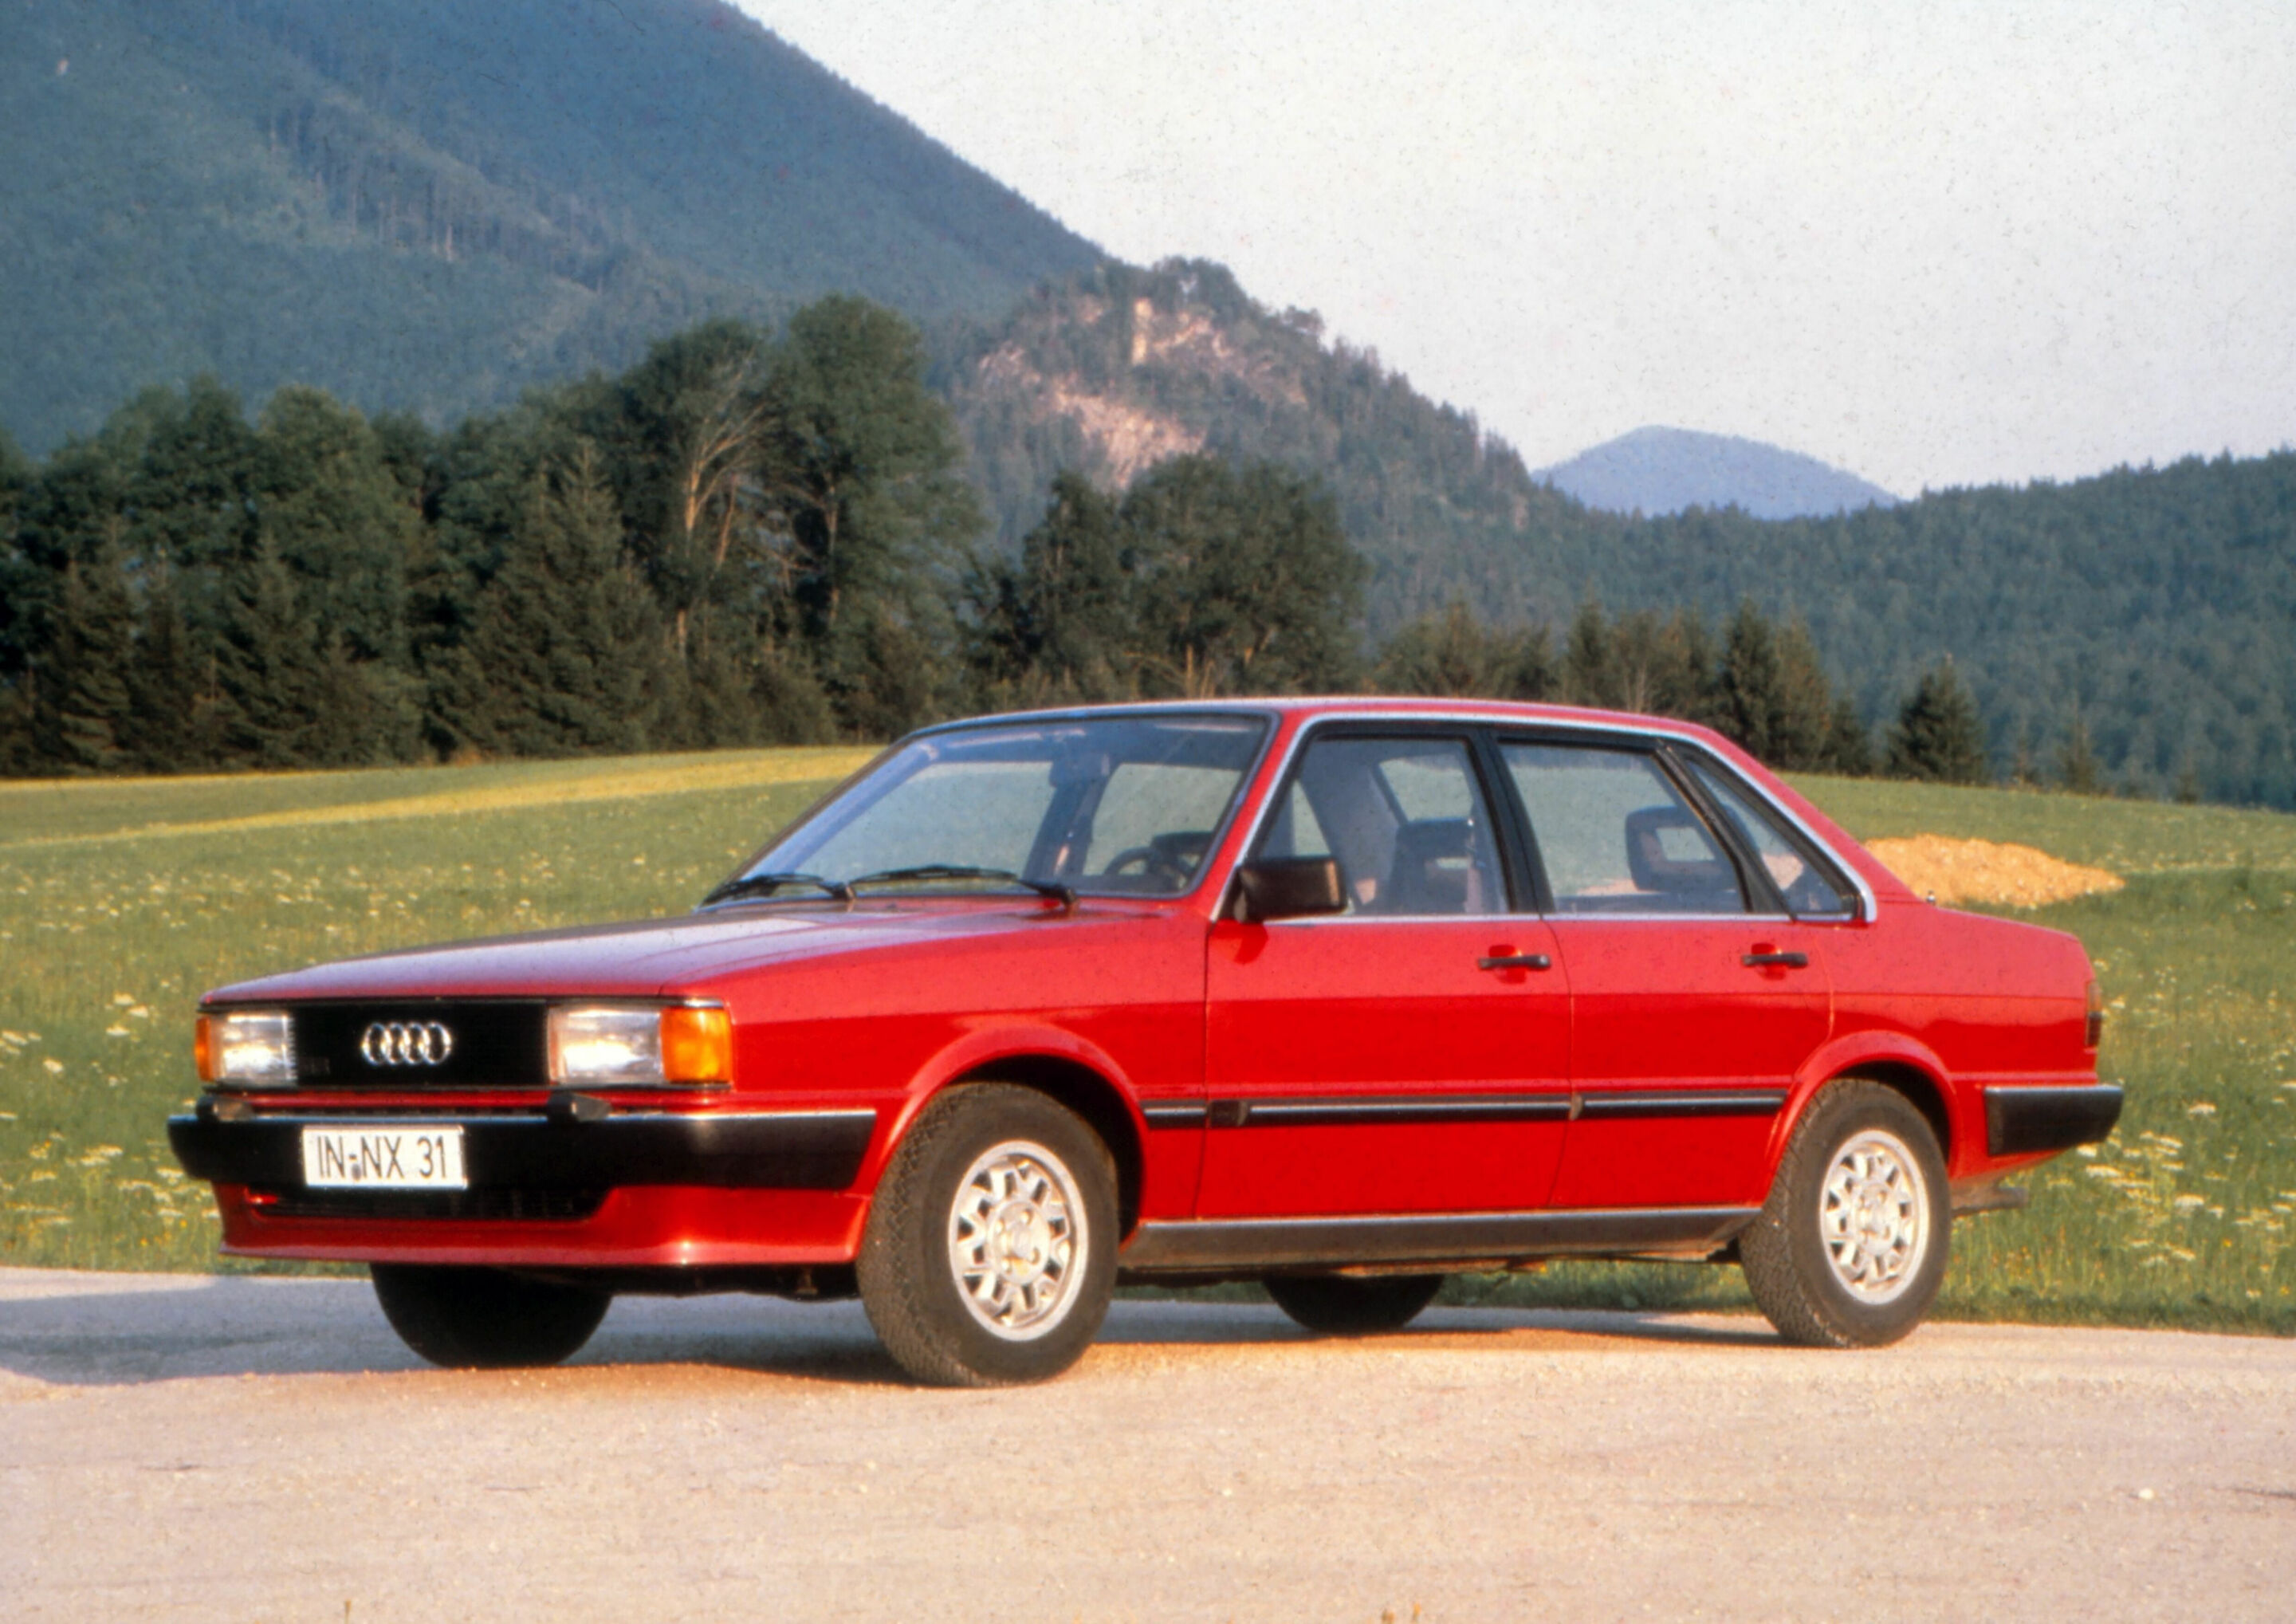 Audi 80 CD (B2), model year 1982